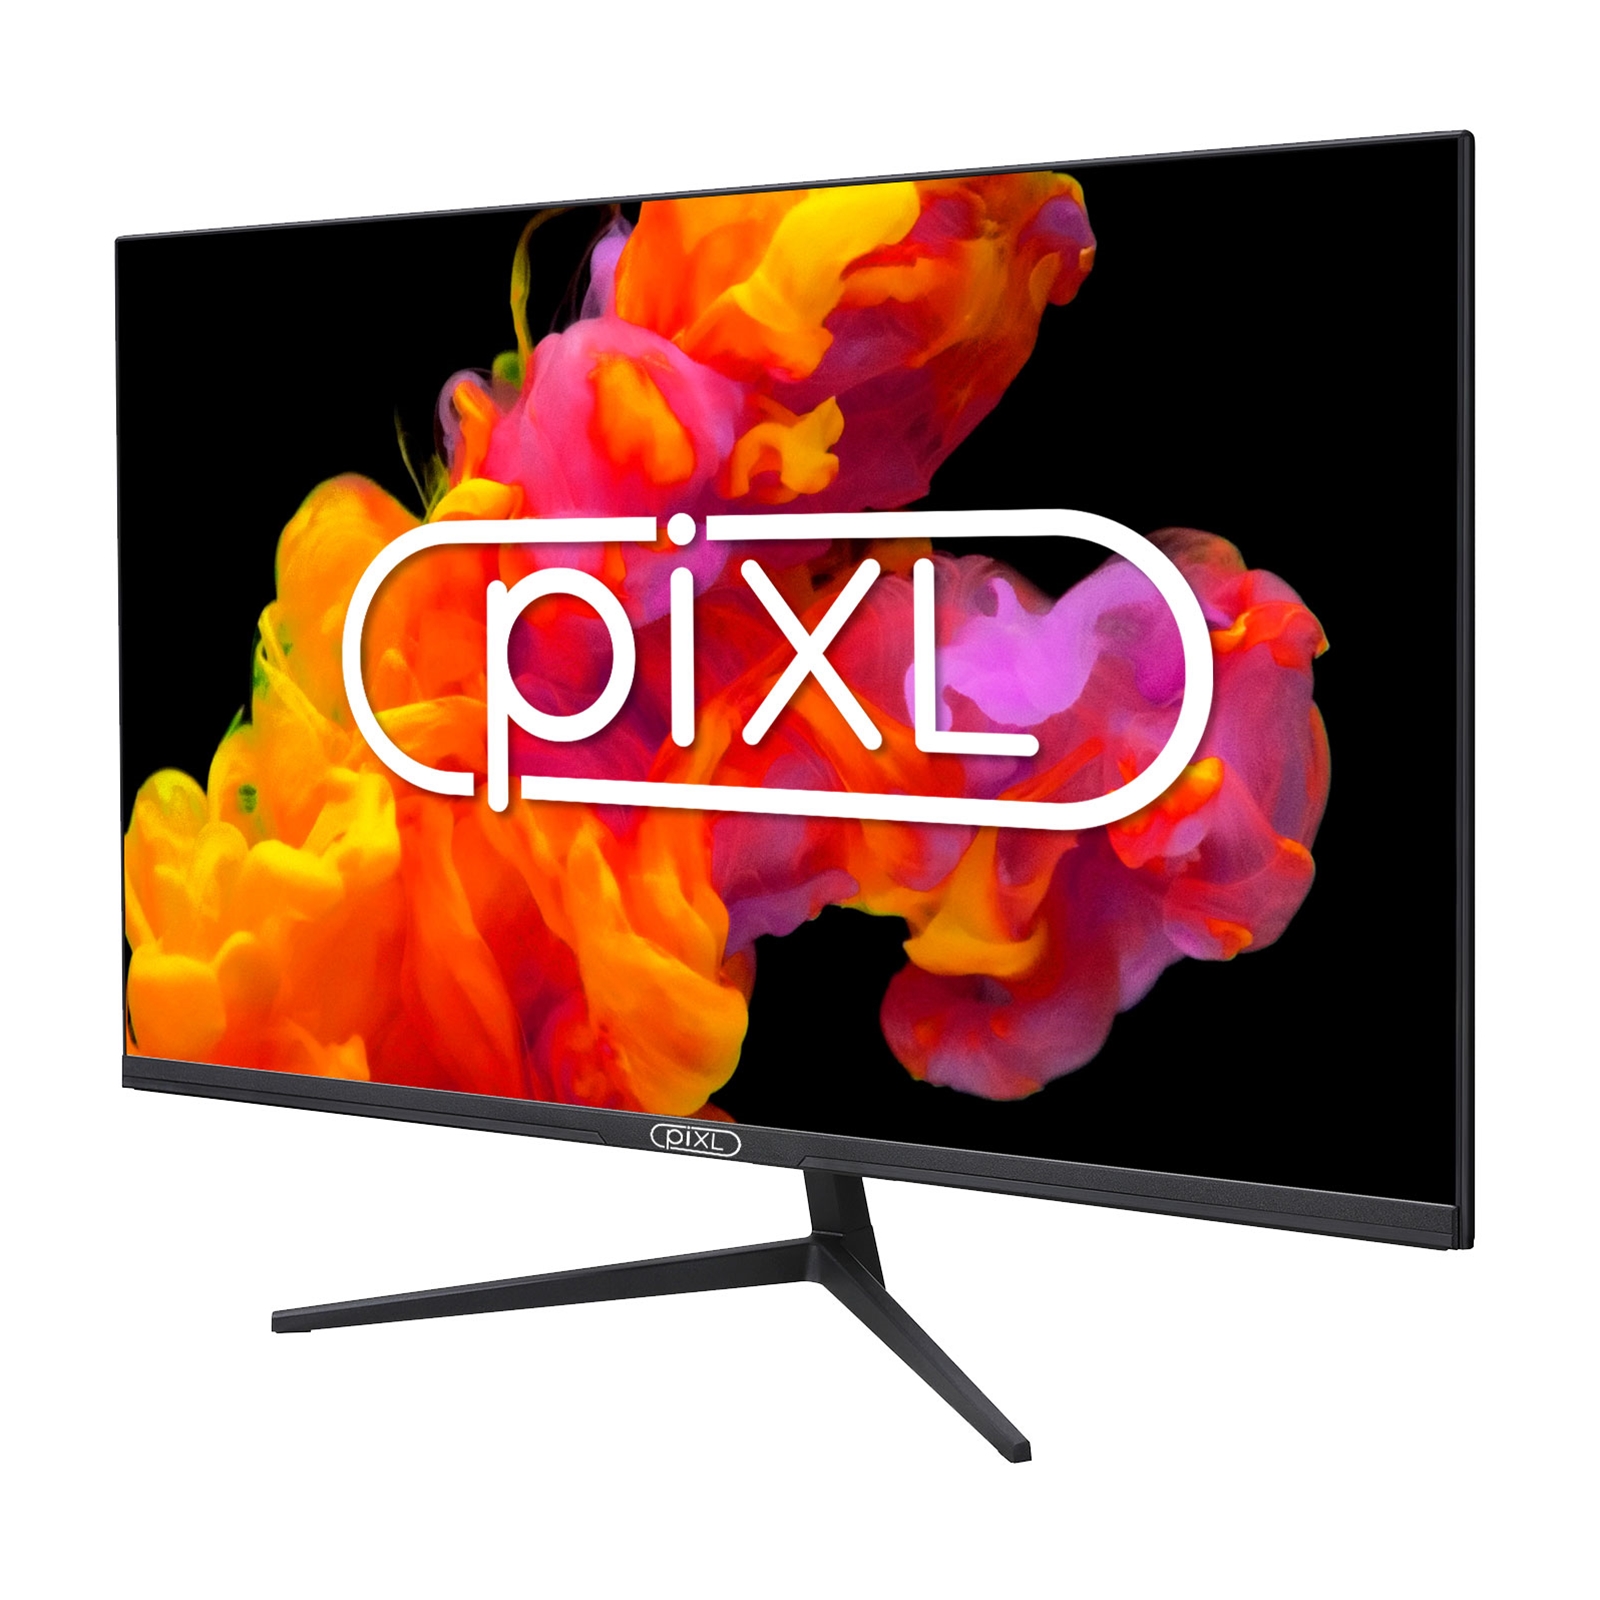 piXL CM32F4 32 Inch Frameless Monitor, Widescreen IPS LCD Panel, Full HD 1920x1080, 4ms Response Time, 60Hz Refresh, Display Port / HDMI, 16.7 Million Colour Support, VESA Wall Mount, Black Finish